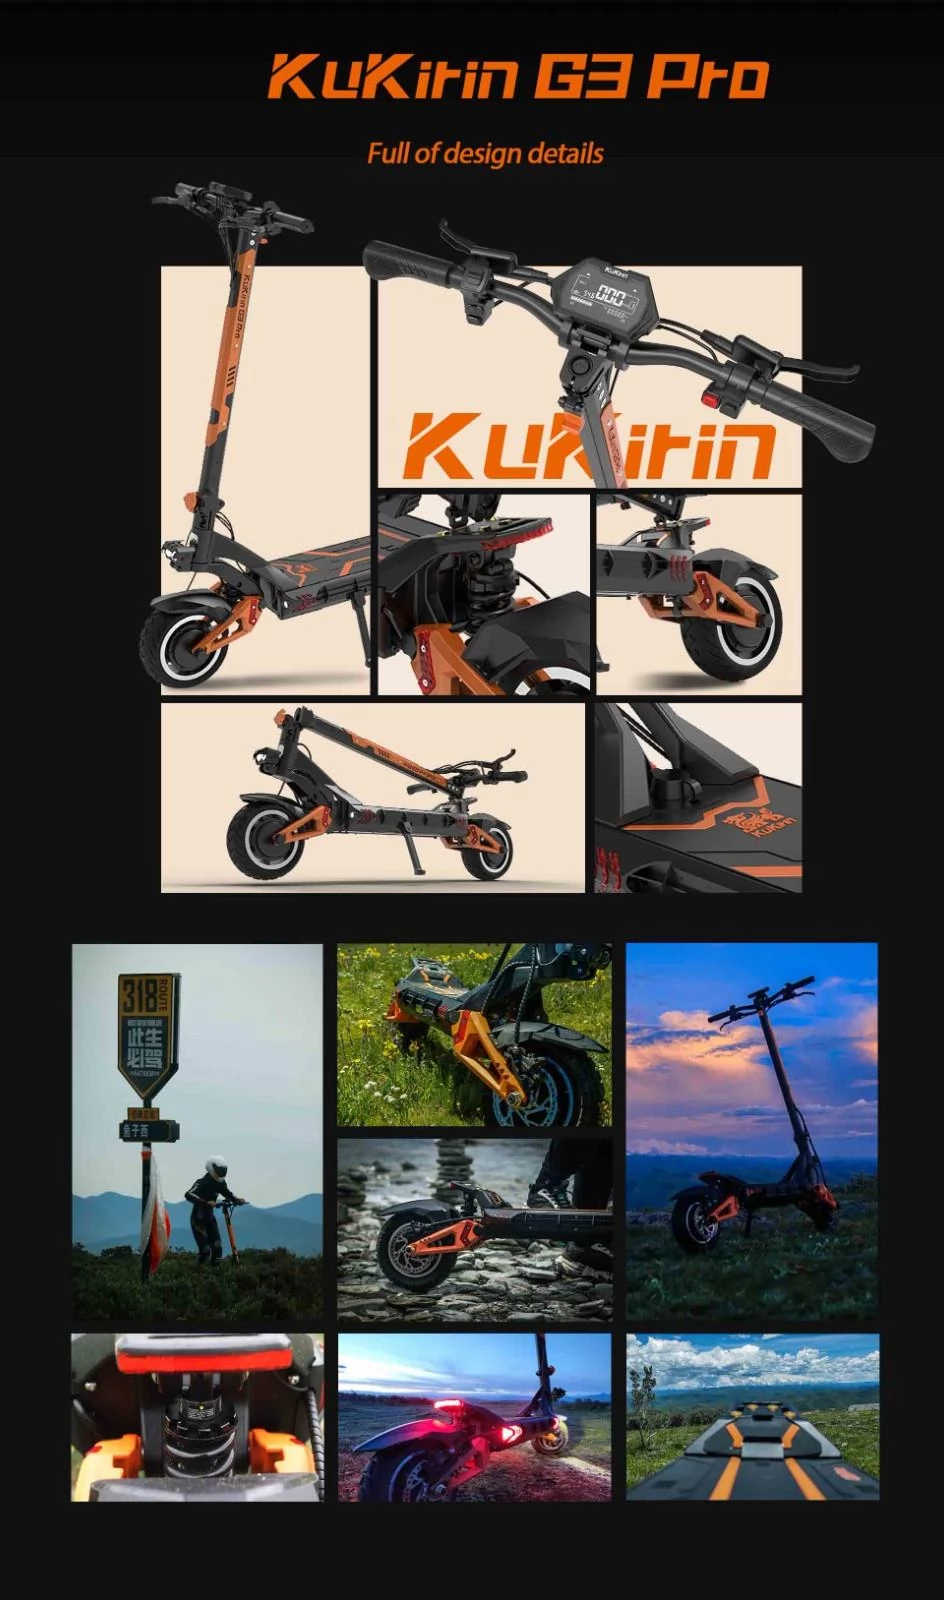 KuKirin G3 Pro Off-Road Electric Scooter - 1200W*2 Powerful Motors & 23.2Ah Battery